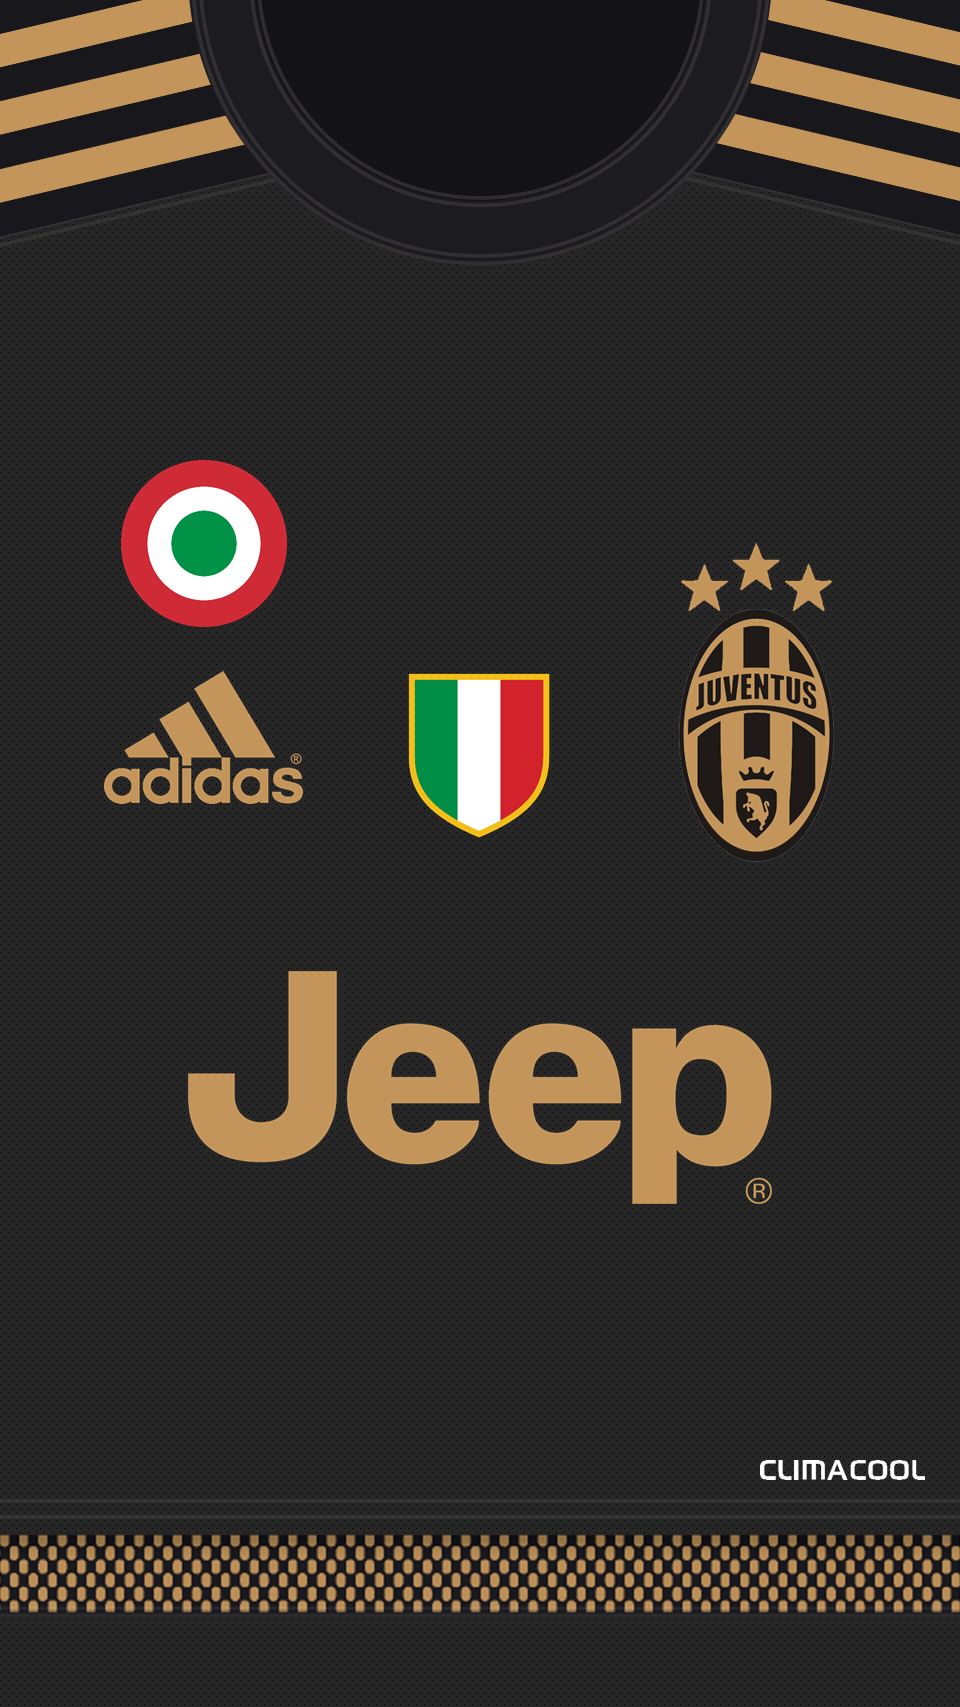 Juventus3_patch.png